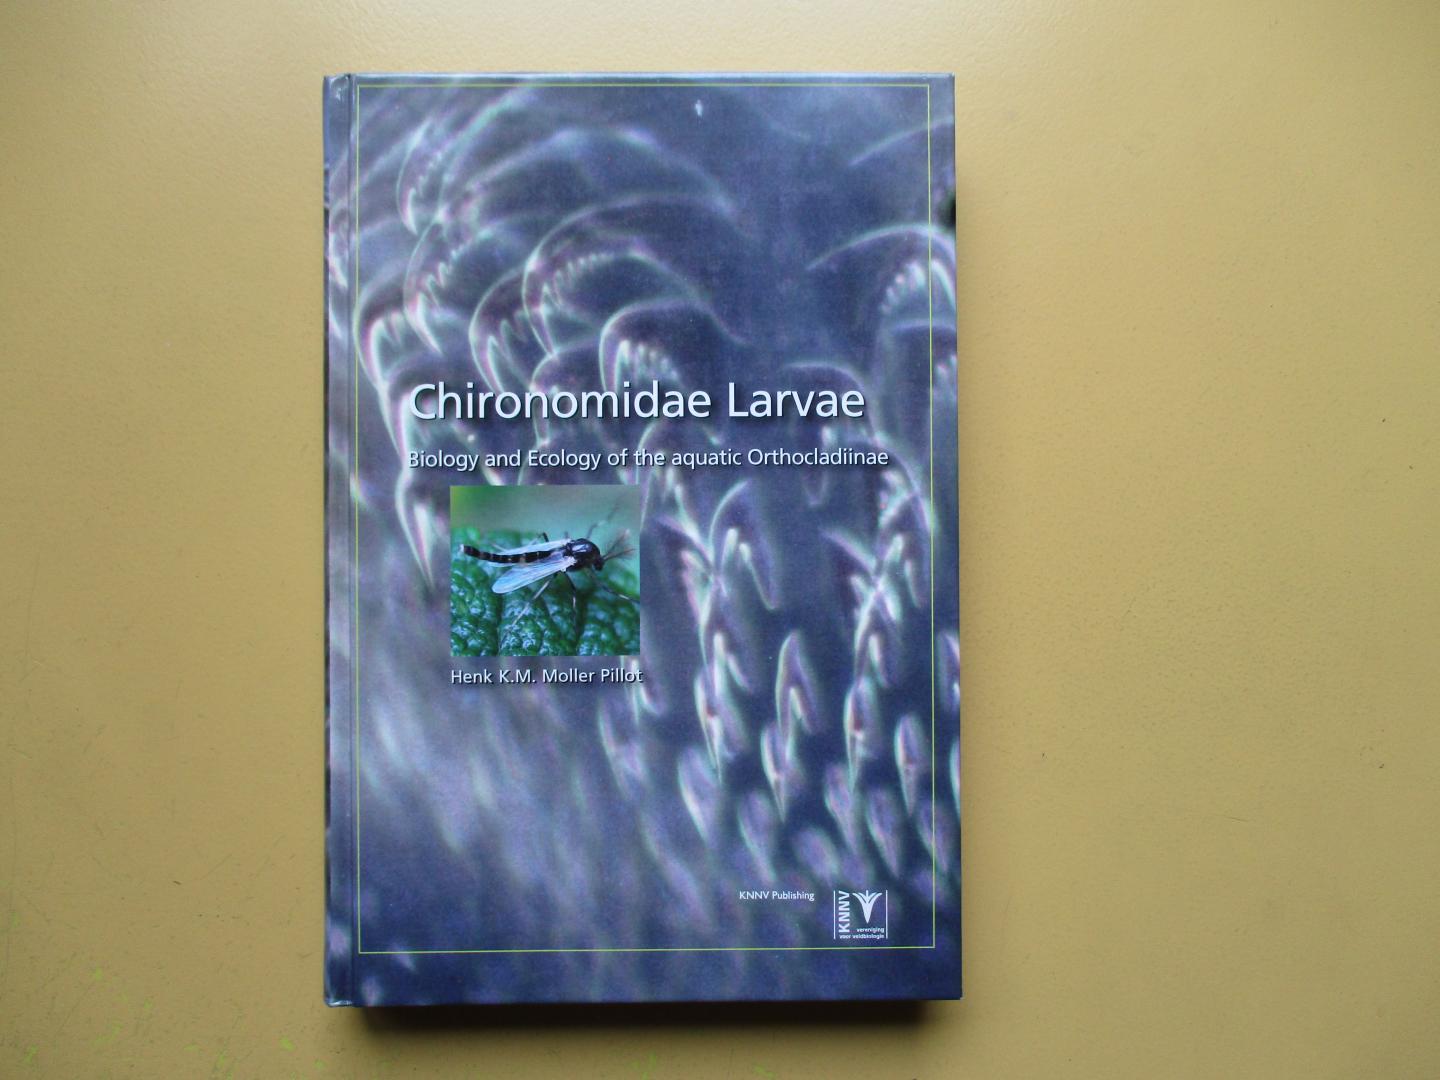 Moller Pillot, Henk K.M. - Chironomidae Larvae   Volume 3 / biology and ecology of the aquatic orthocladiinae